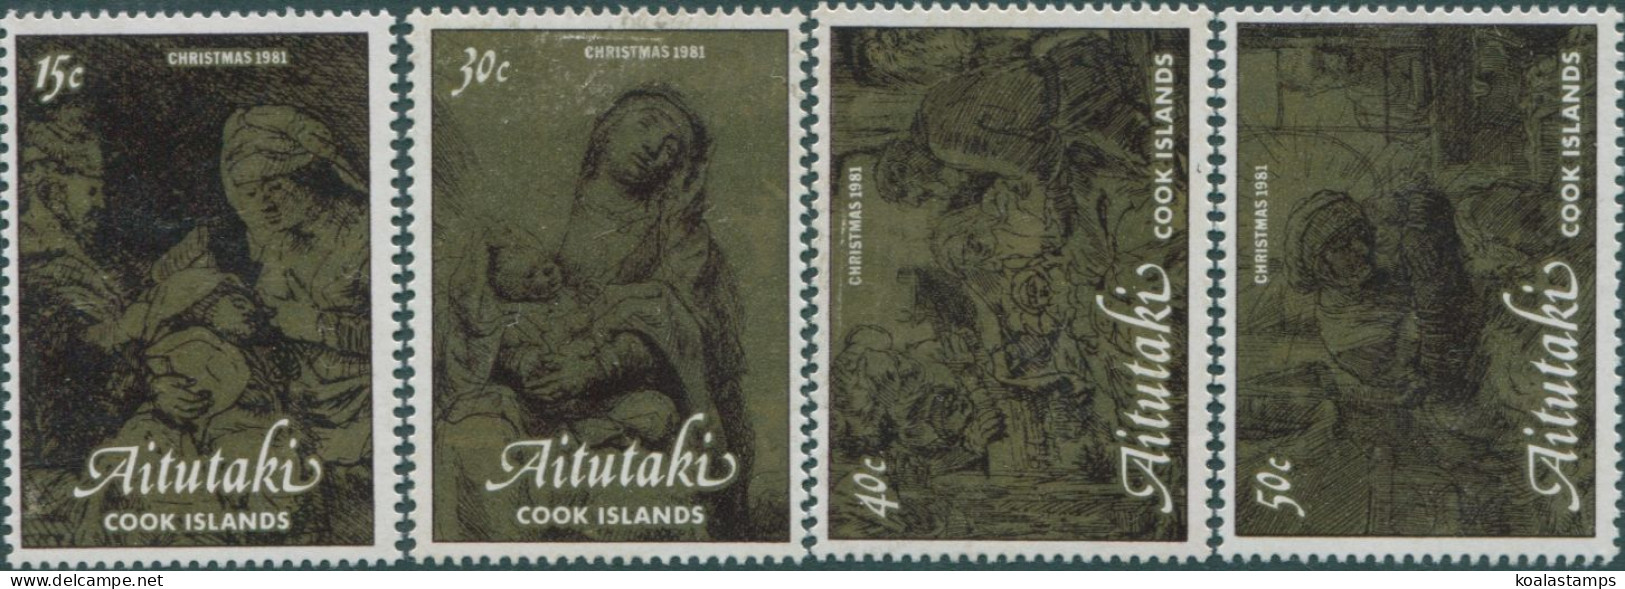 Aitutaki 1981 SG406-409 Christmas Set MNH - Cook Islands